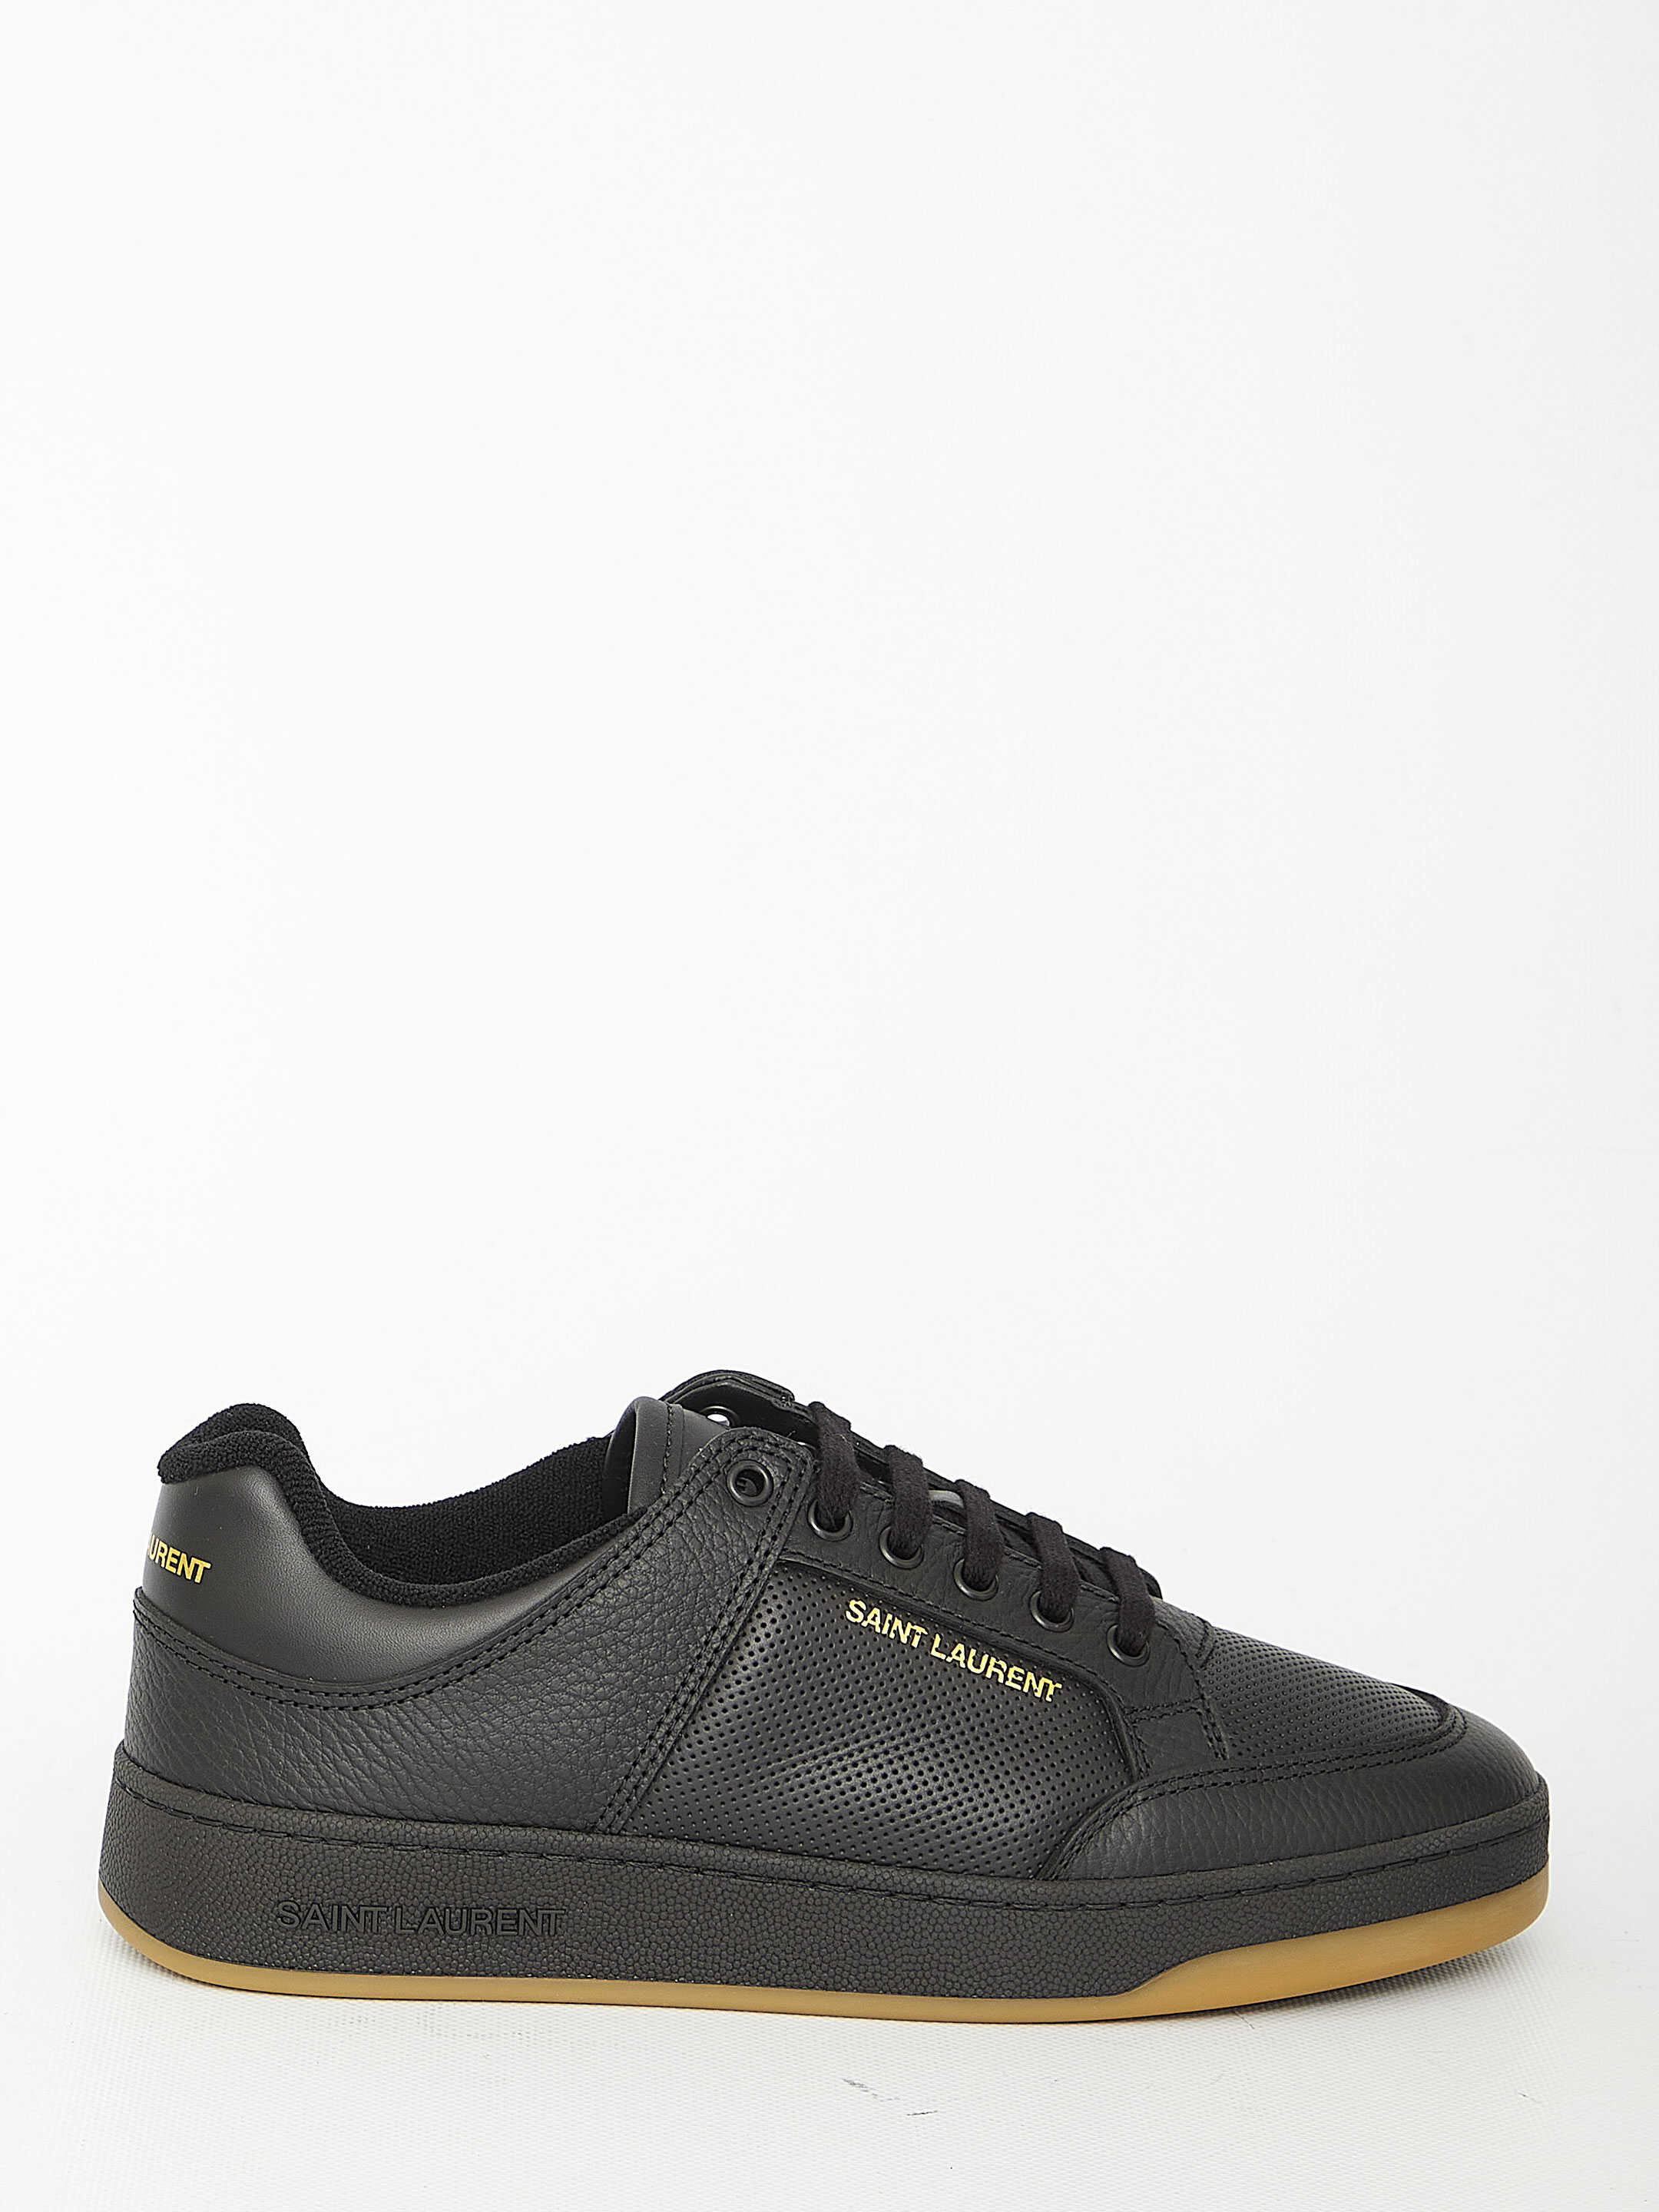 Saint Laurent Sl/61 Sneakers BLACK